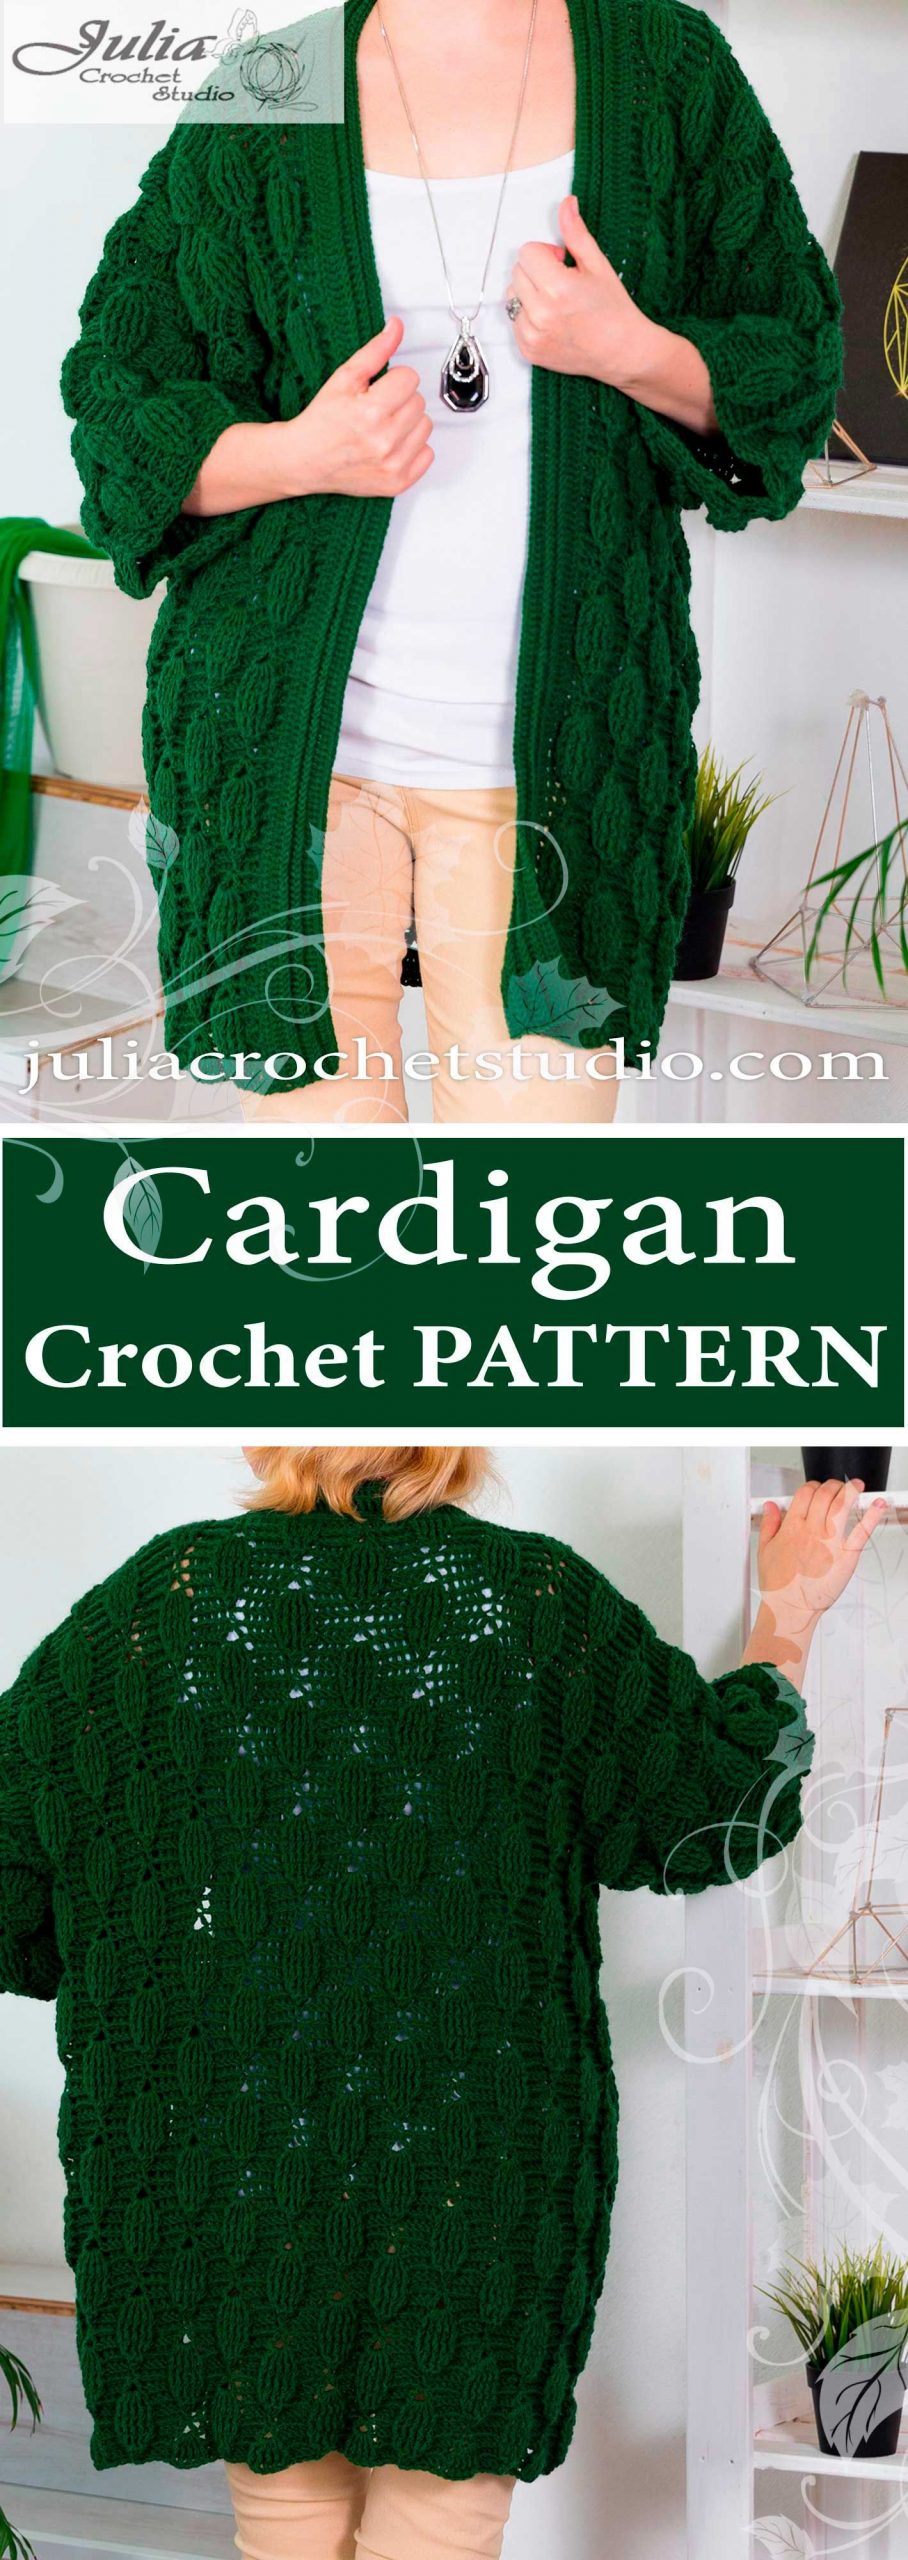 Crochet cardigan pattern